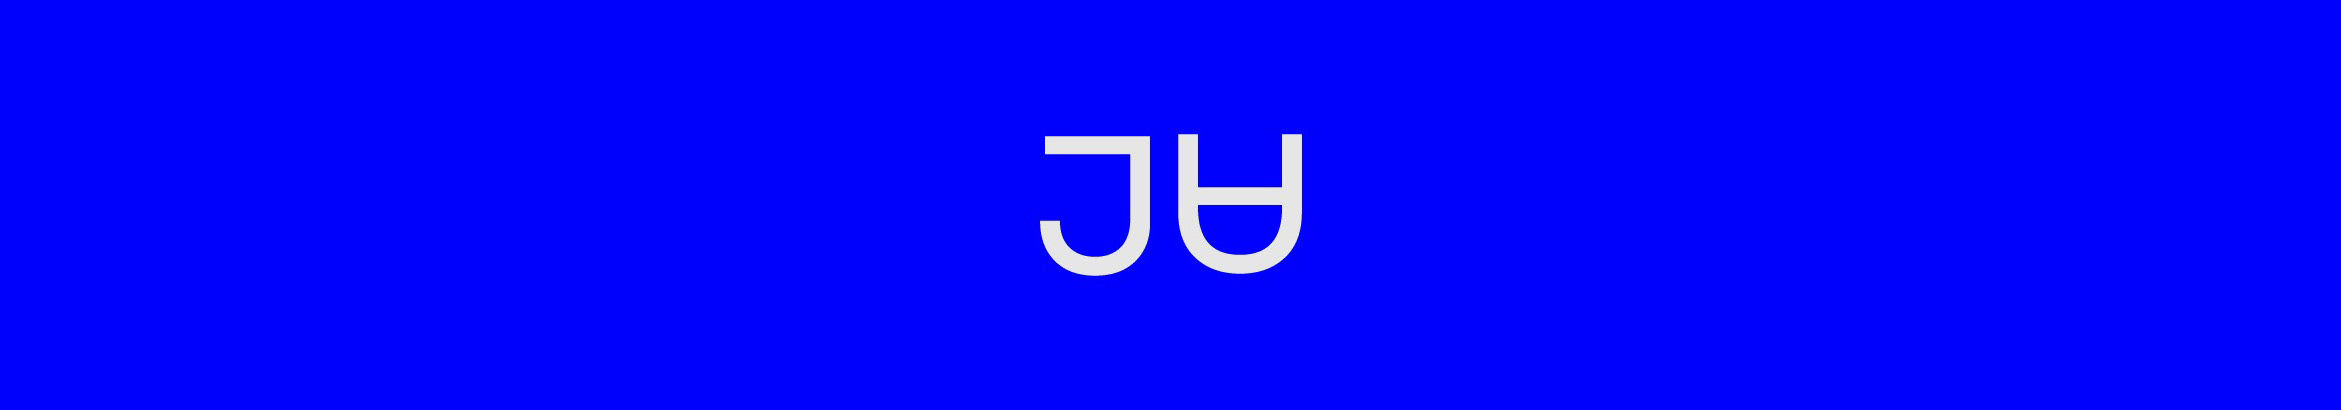 Jerga Studio's profile banner